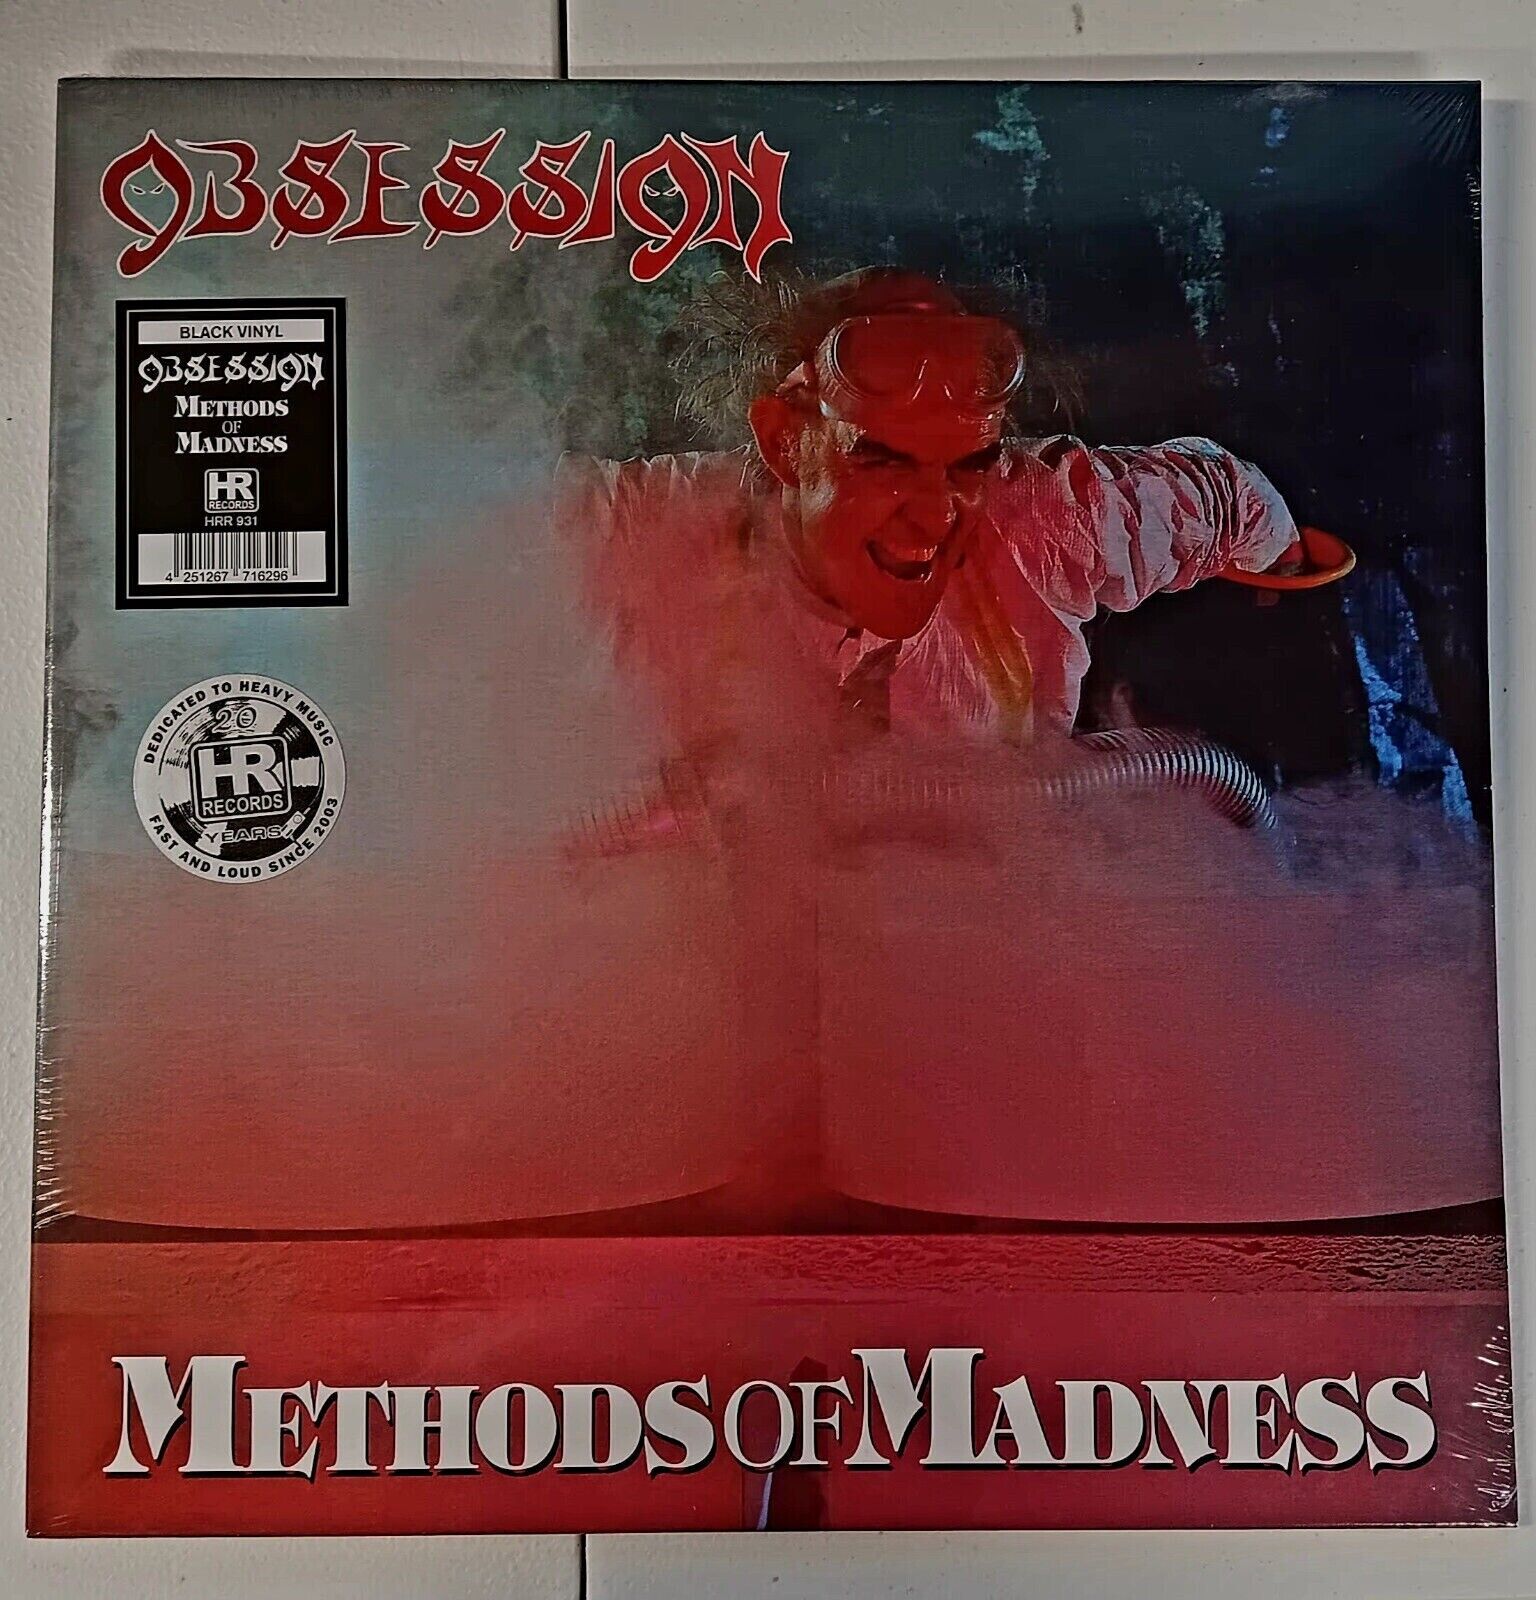 Obssession Methods Of Madness Black Vinyl LP Record New